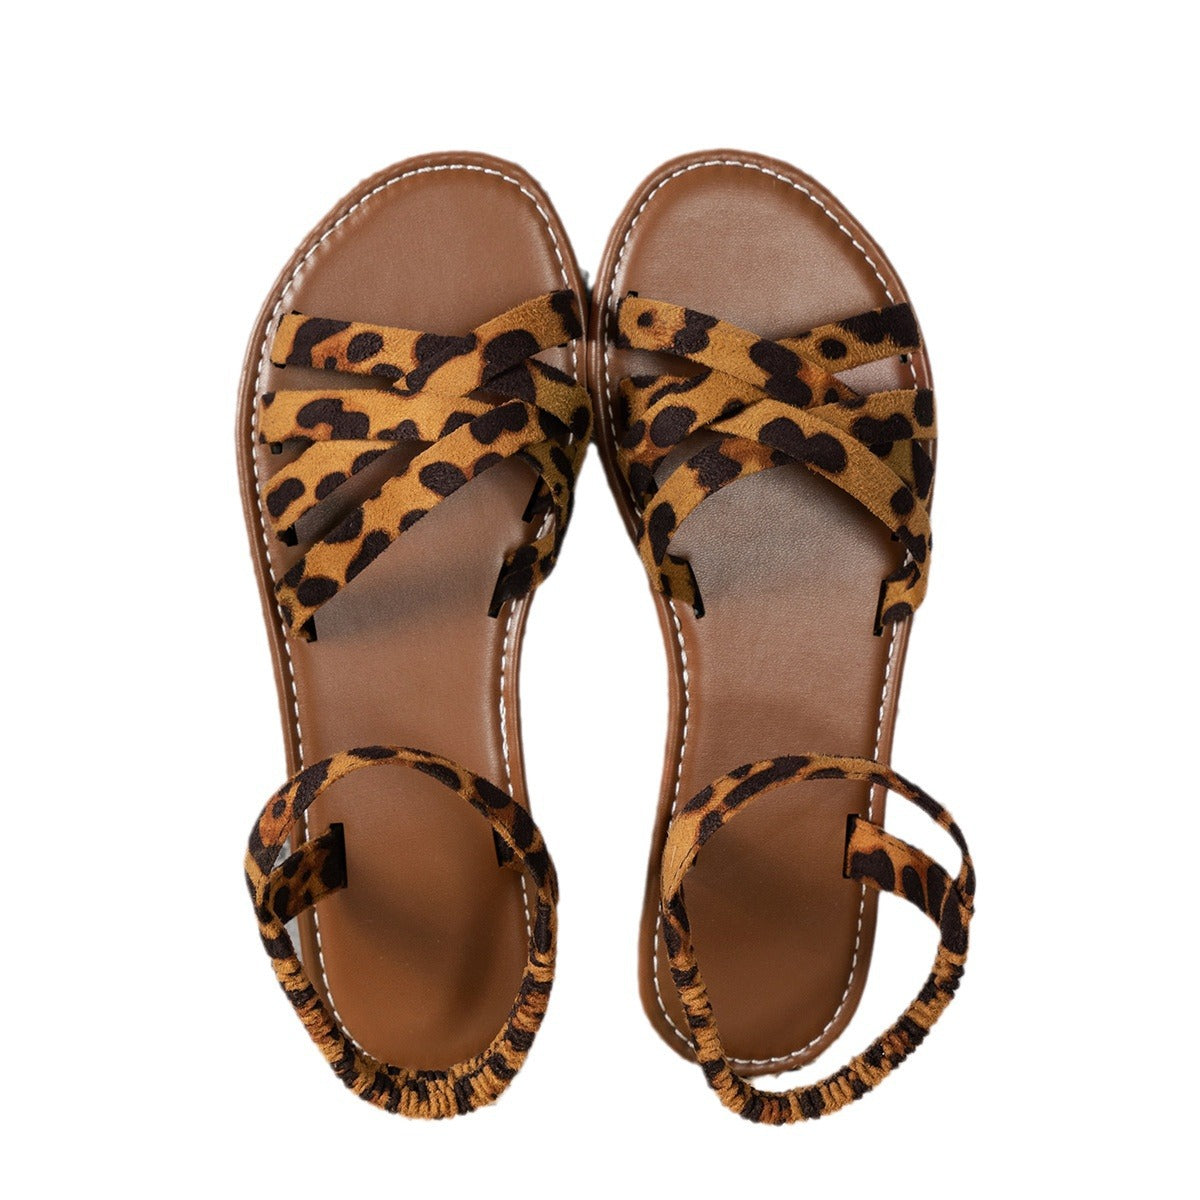 Leopard Print Sandals Women's Fashion Flat Non-slip